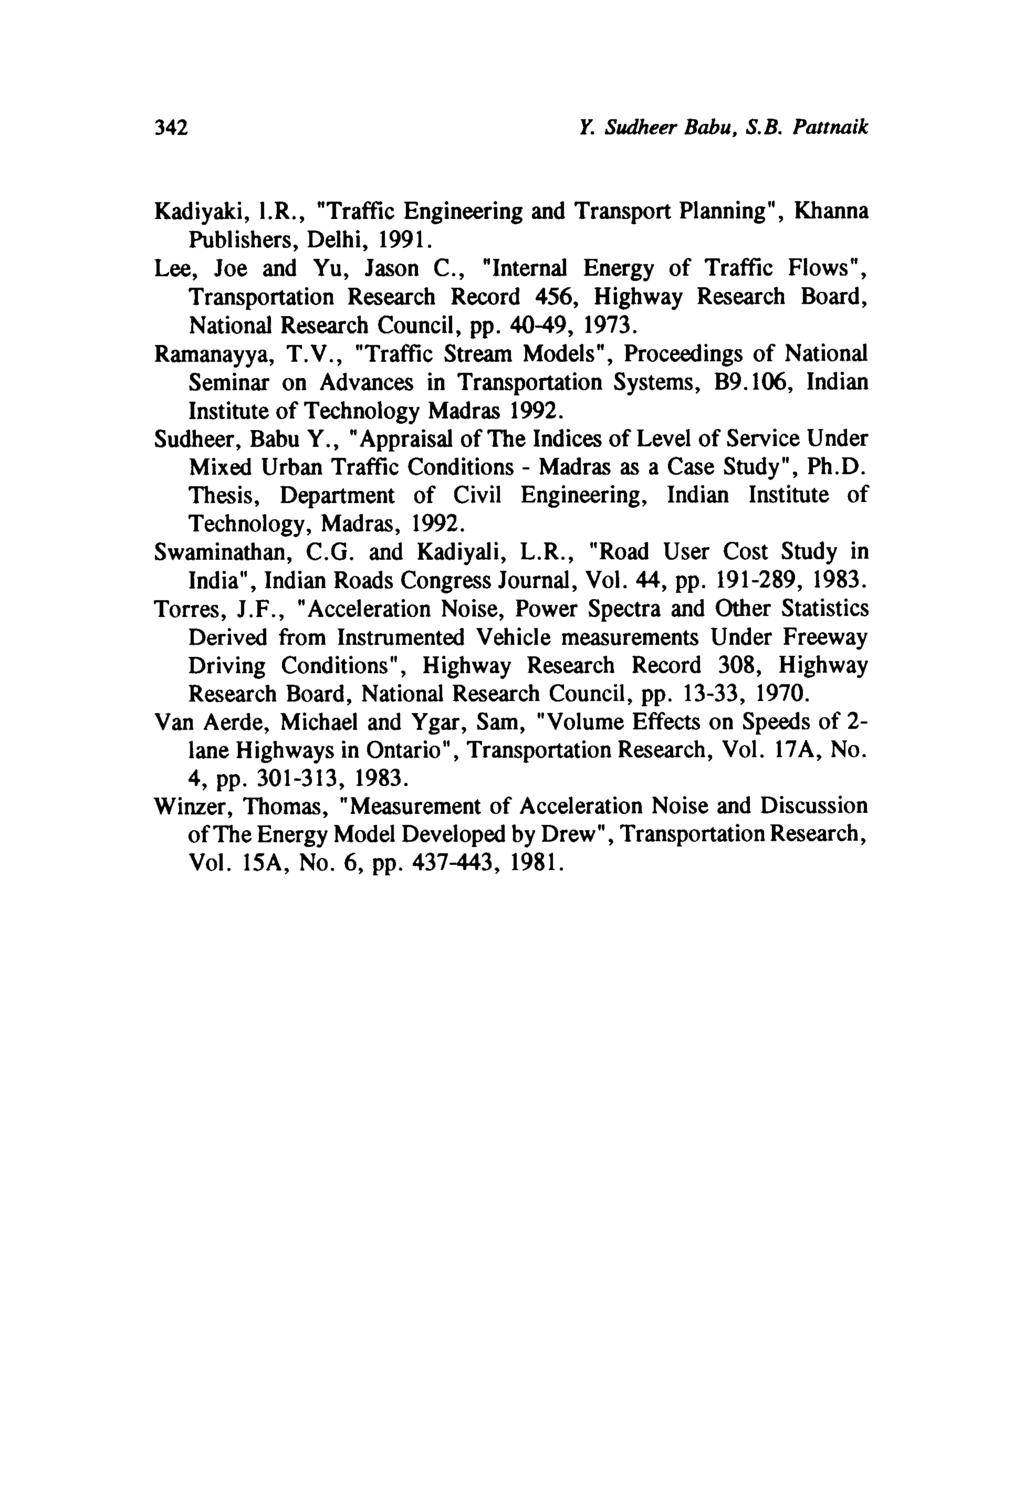 342 Y. Sheer Babu, S. B. Pattnaik Kadiyaki, I.R., "Traffic Engineering and Transport Planning", Khanna Publishers, Delhi, 1991. Lee, Joe and Yu, Jason C.